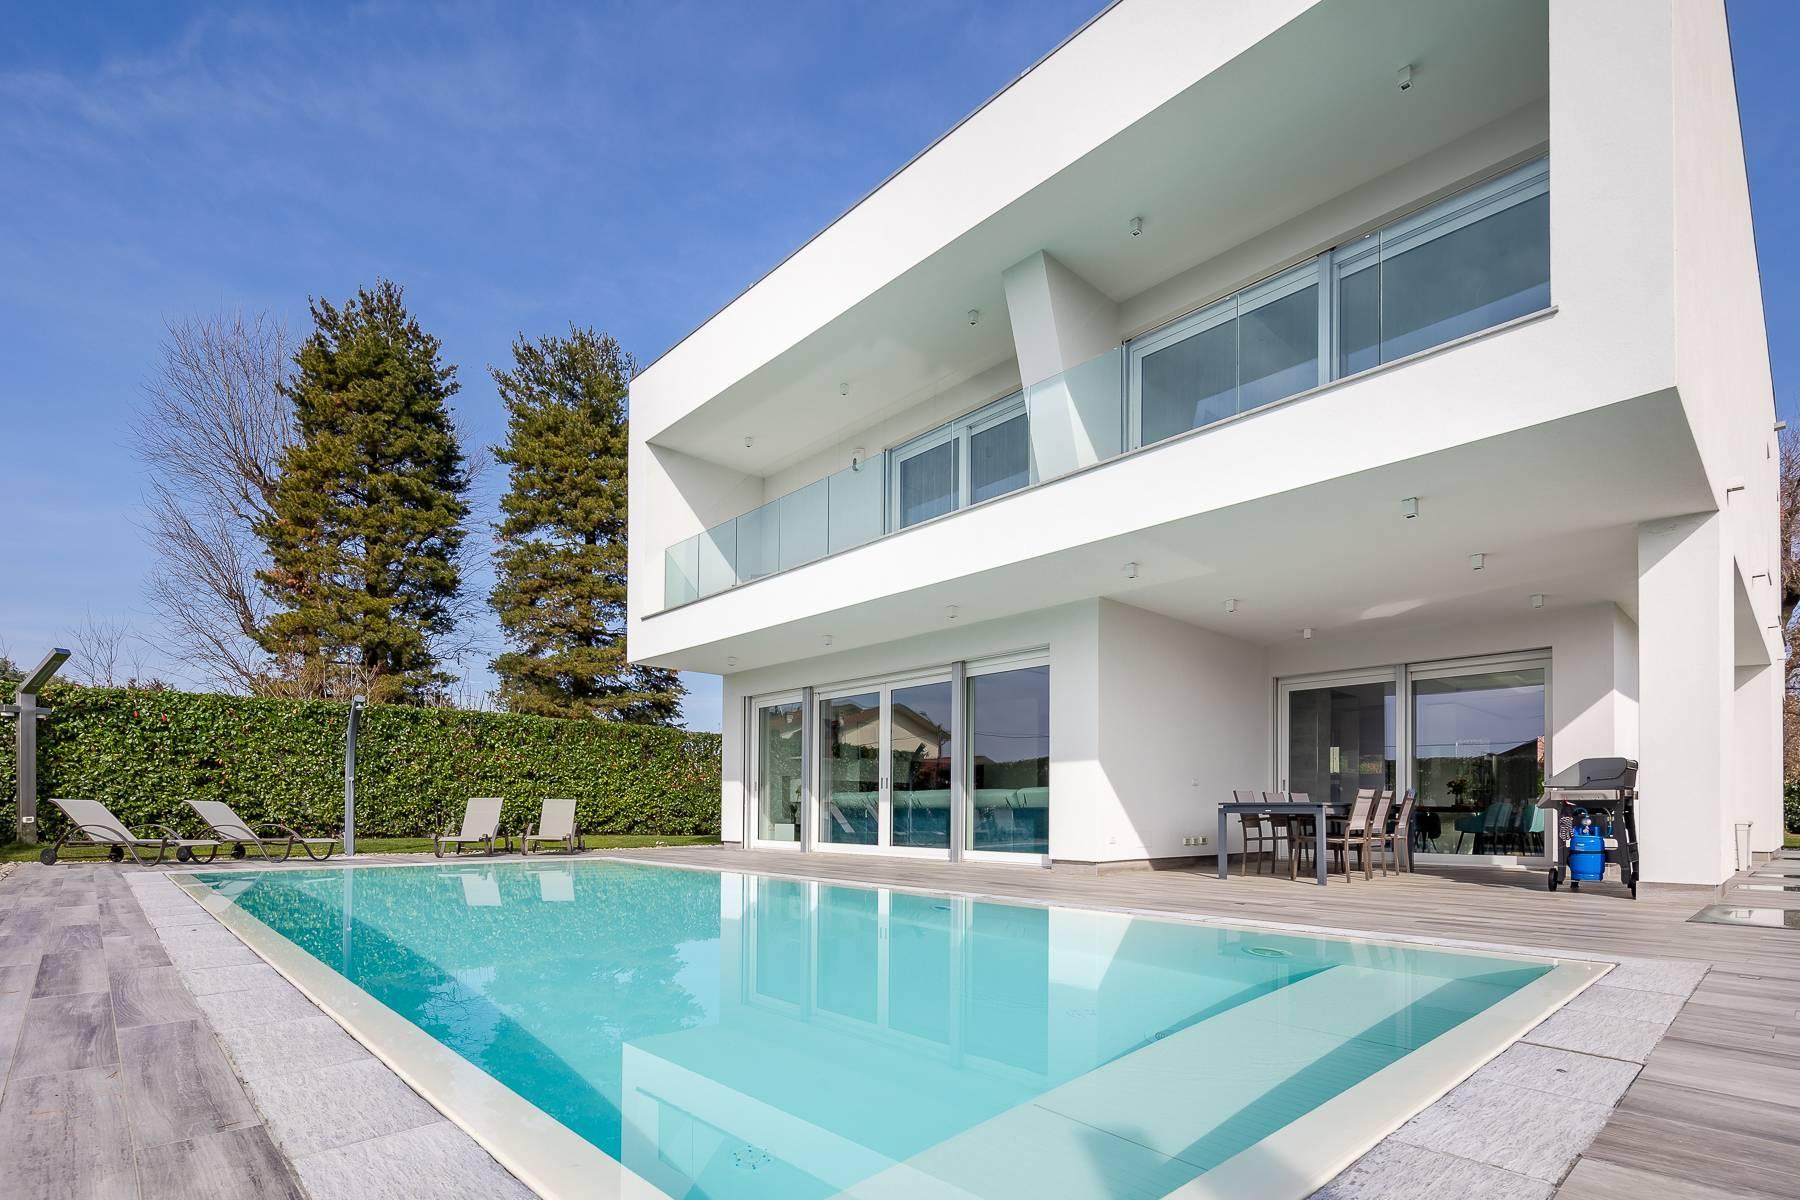 Élégante villa minimaliste avec jardin et piscine. - 1